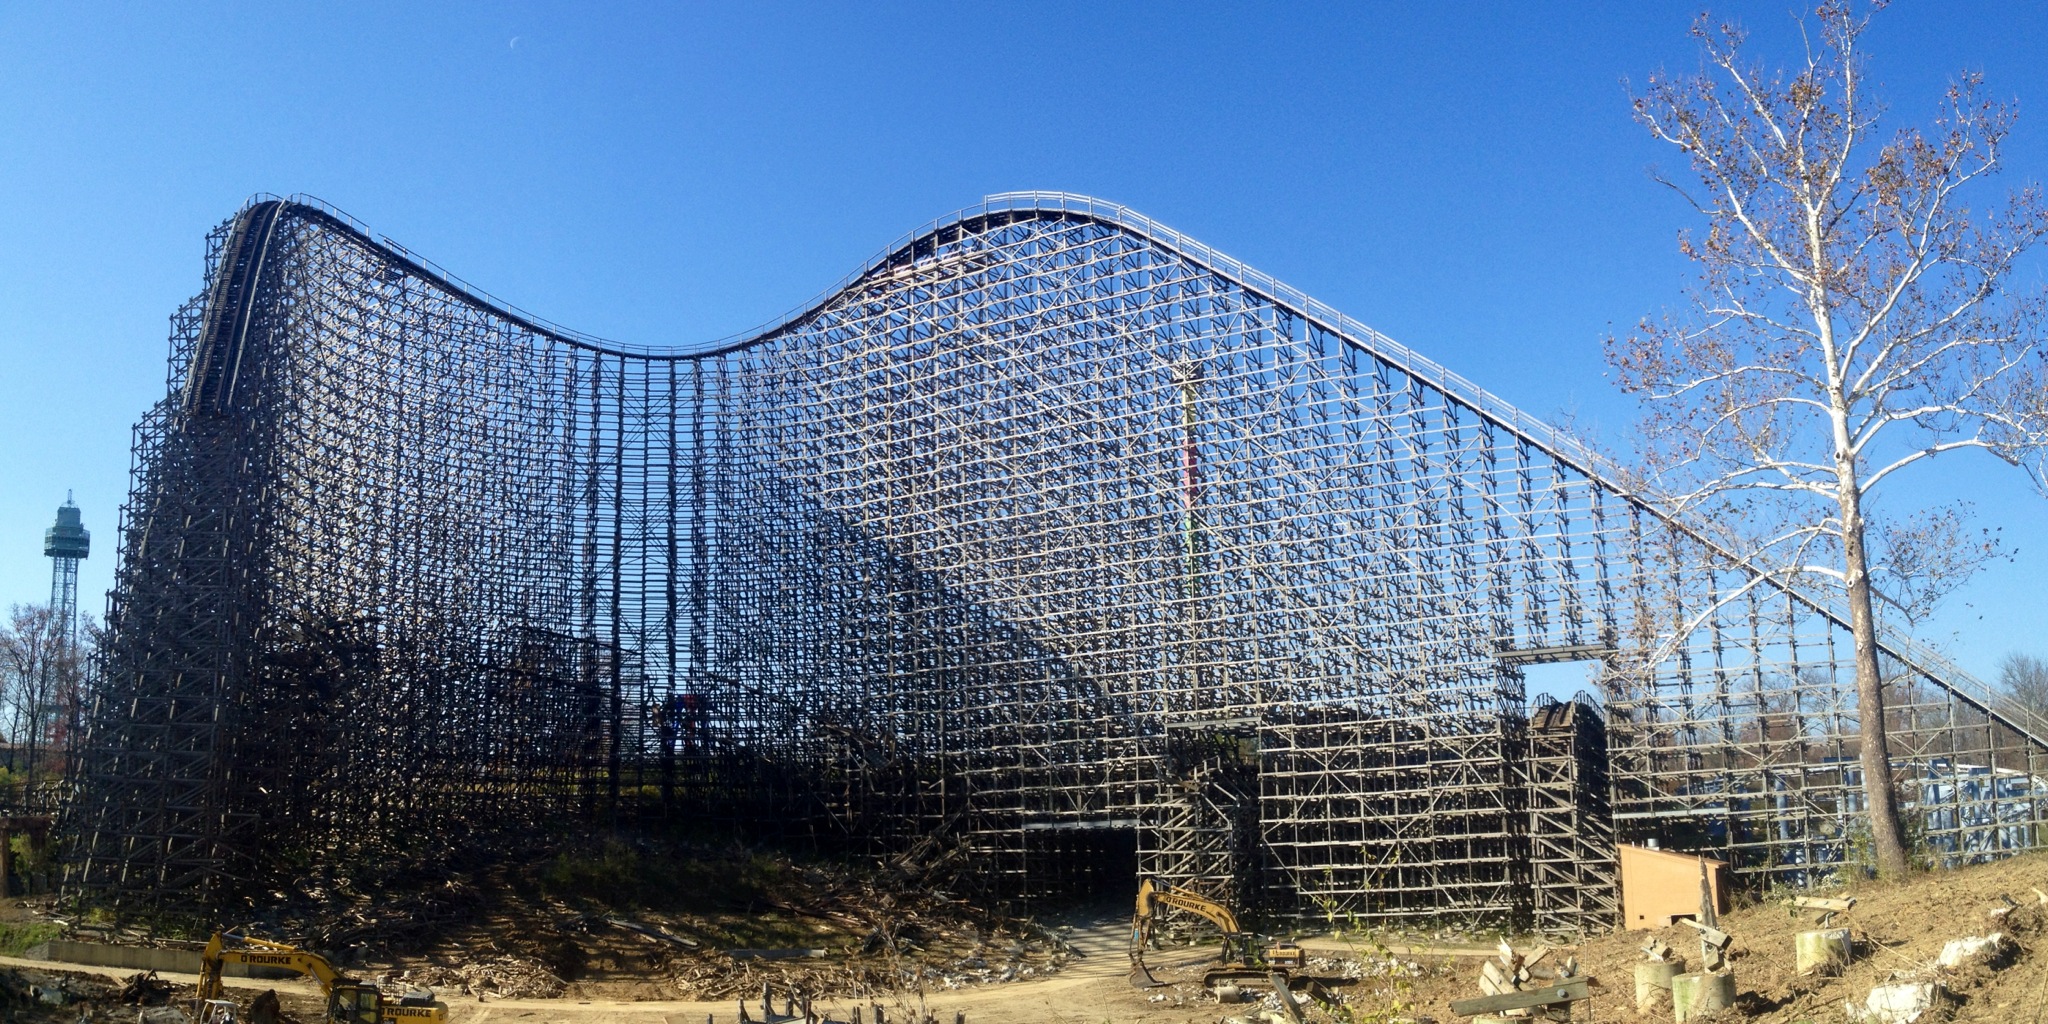 Paramount’s Kings Island- “Son of Beast” Roller Coaster Demolition